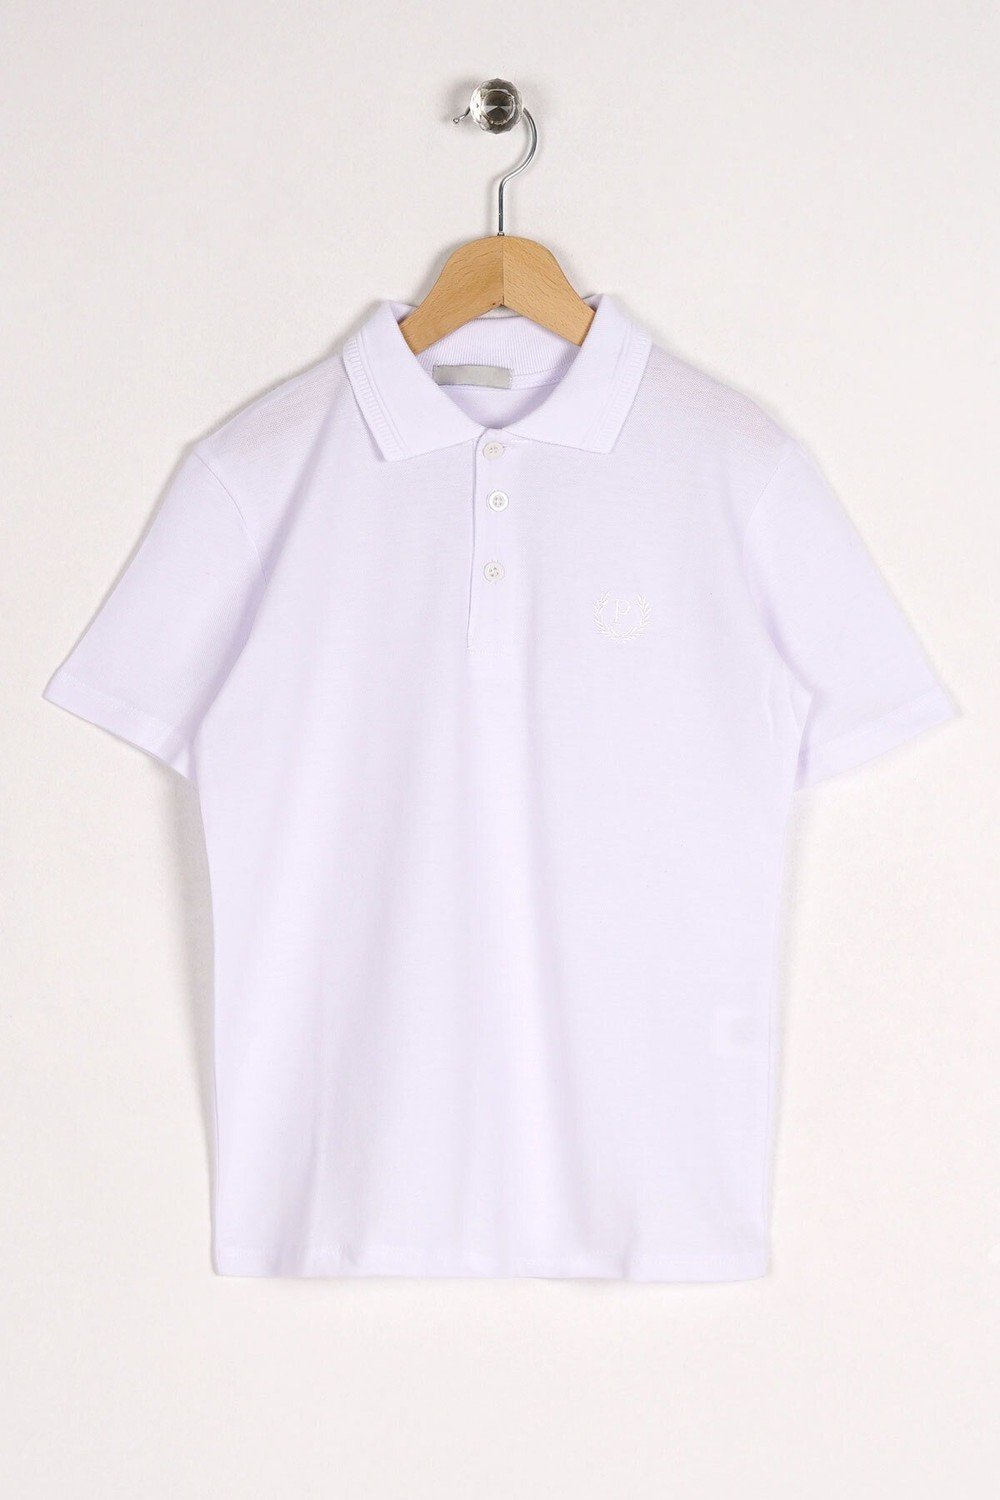 zepkids Polo T-shirt - White - Regular fit